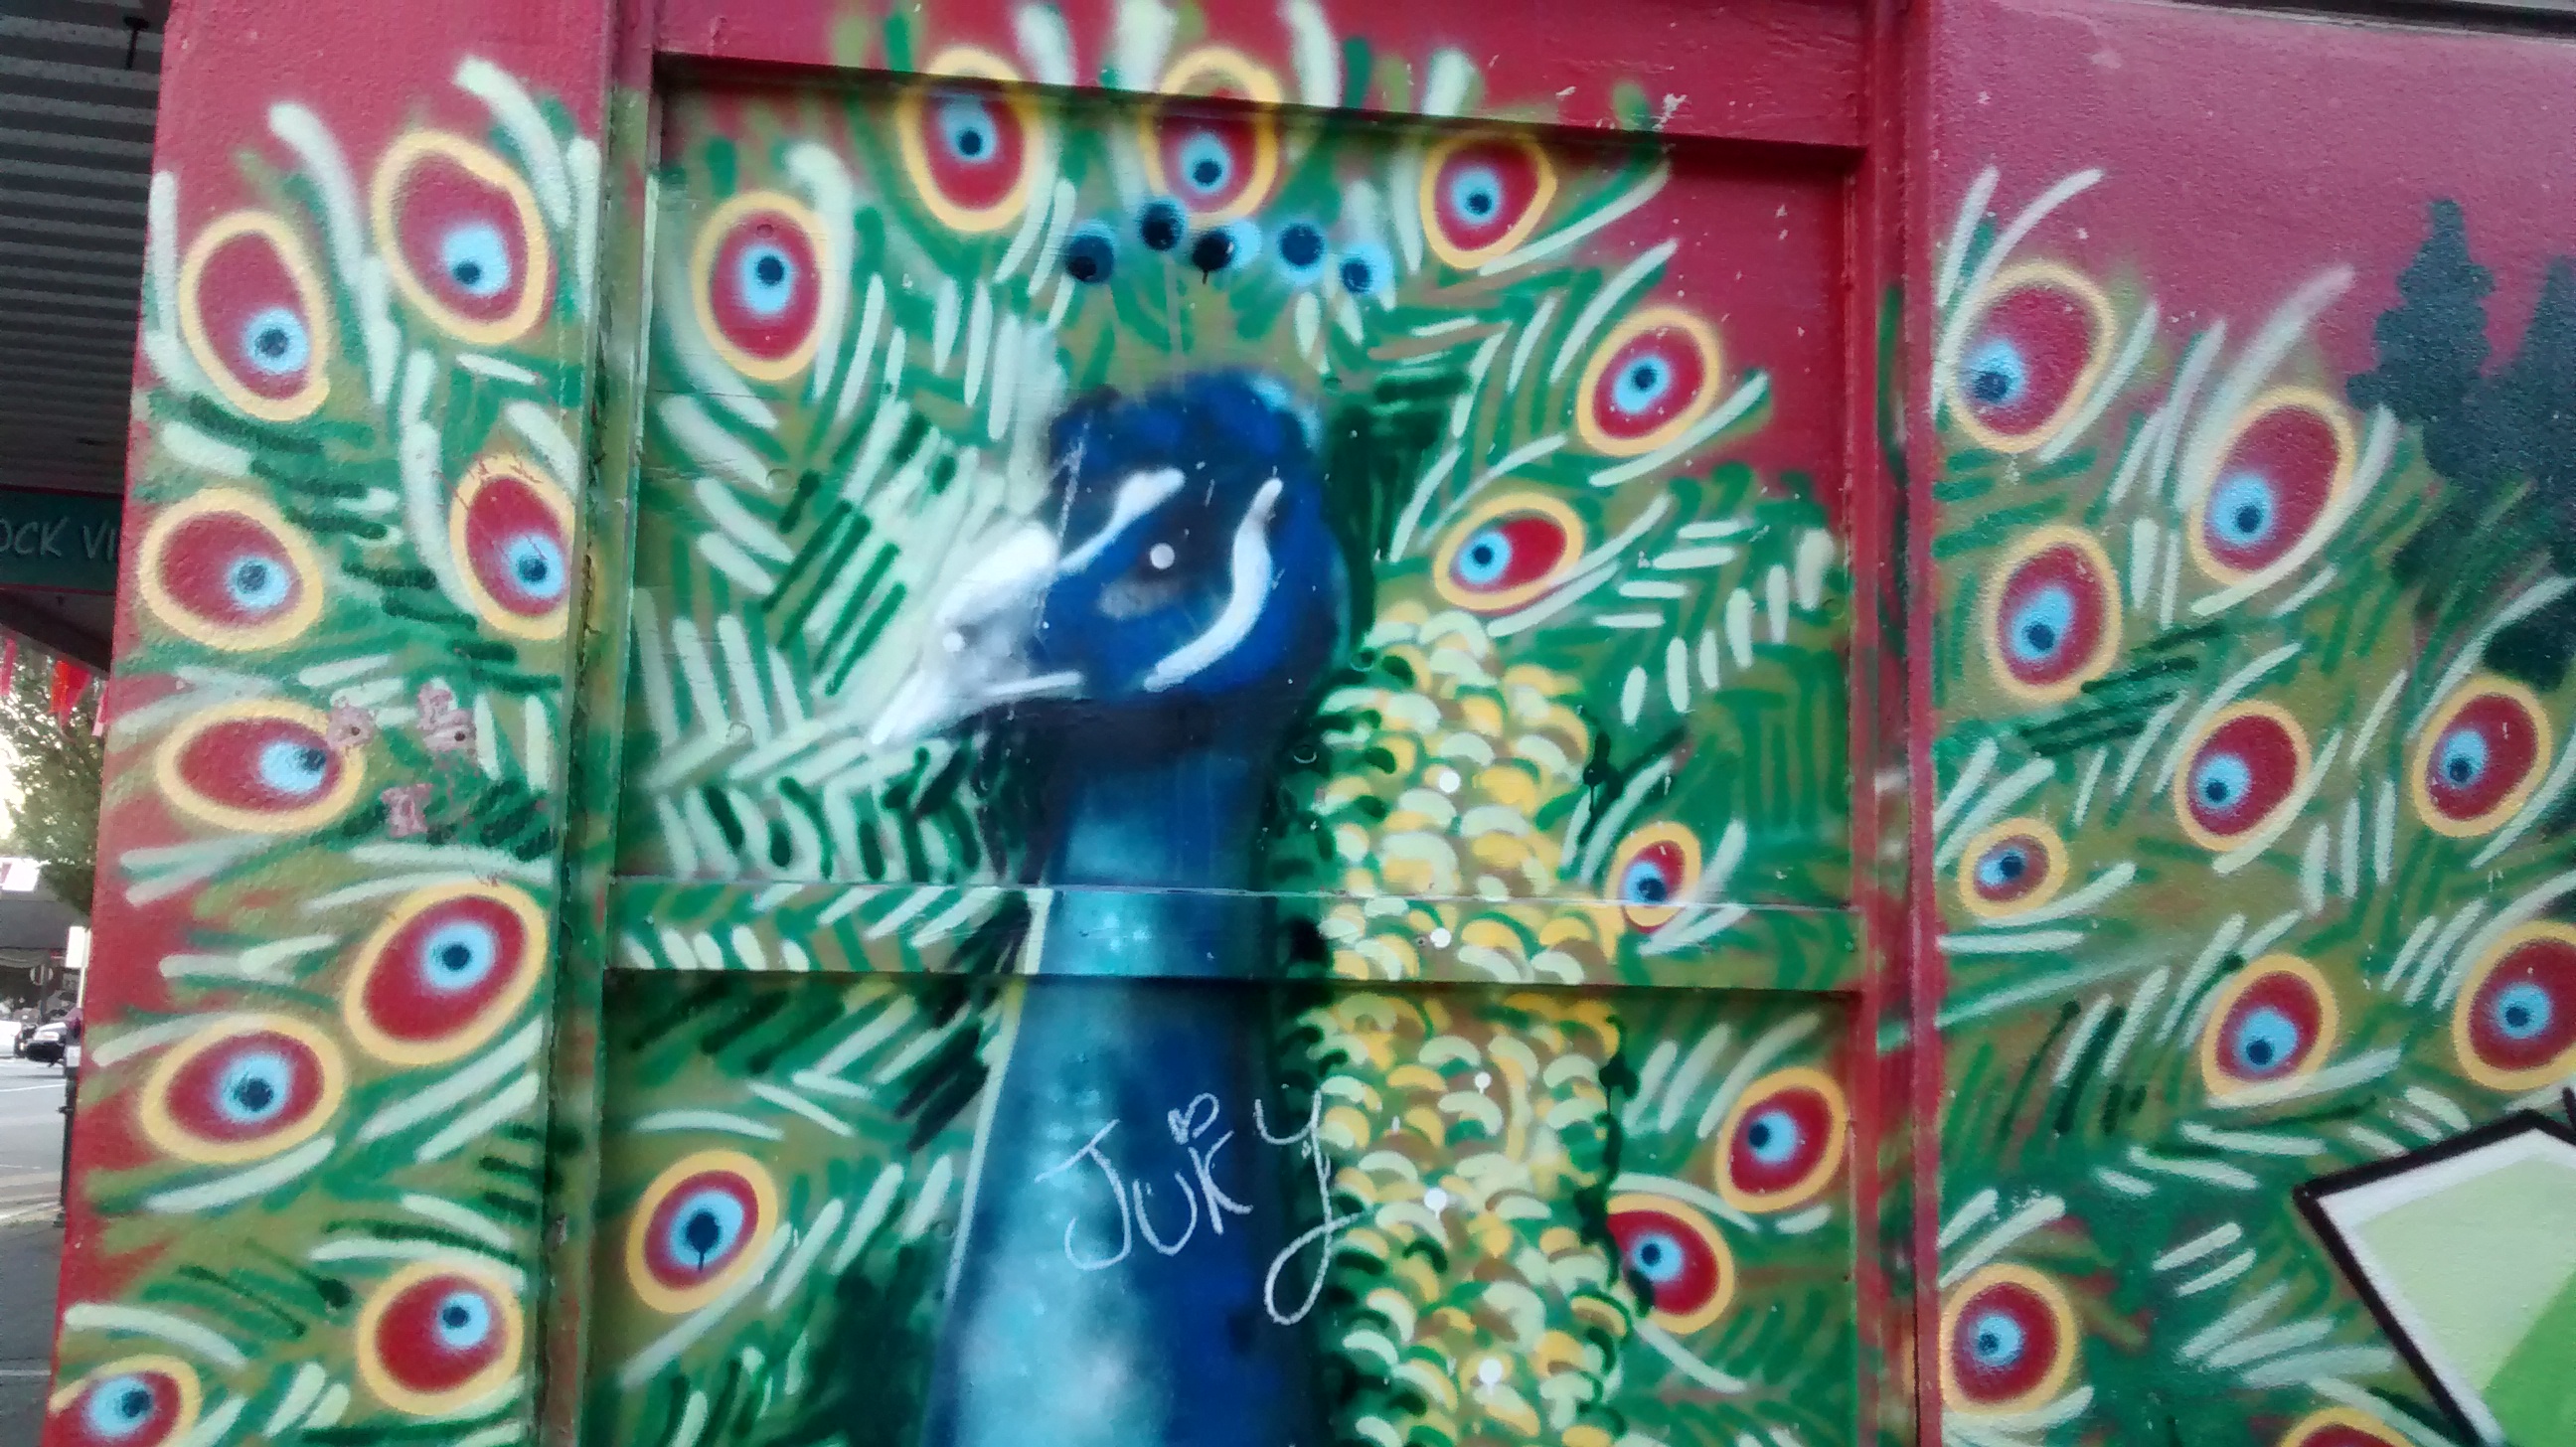 Graffiti in Olympia